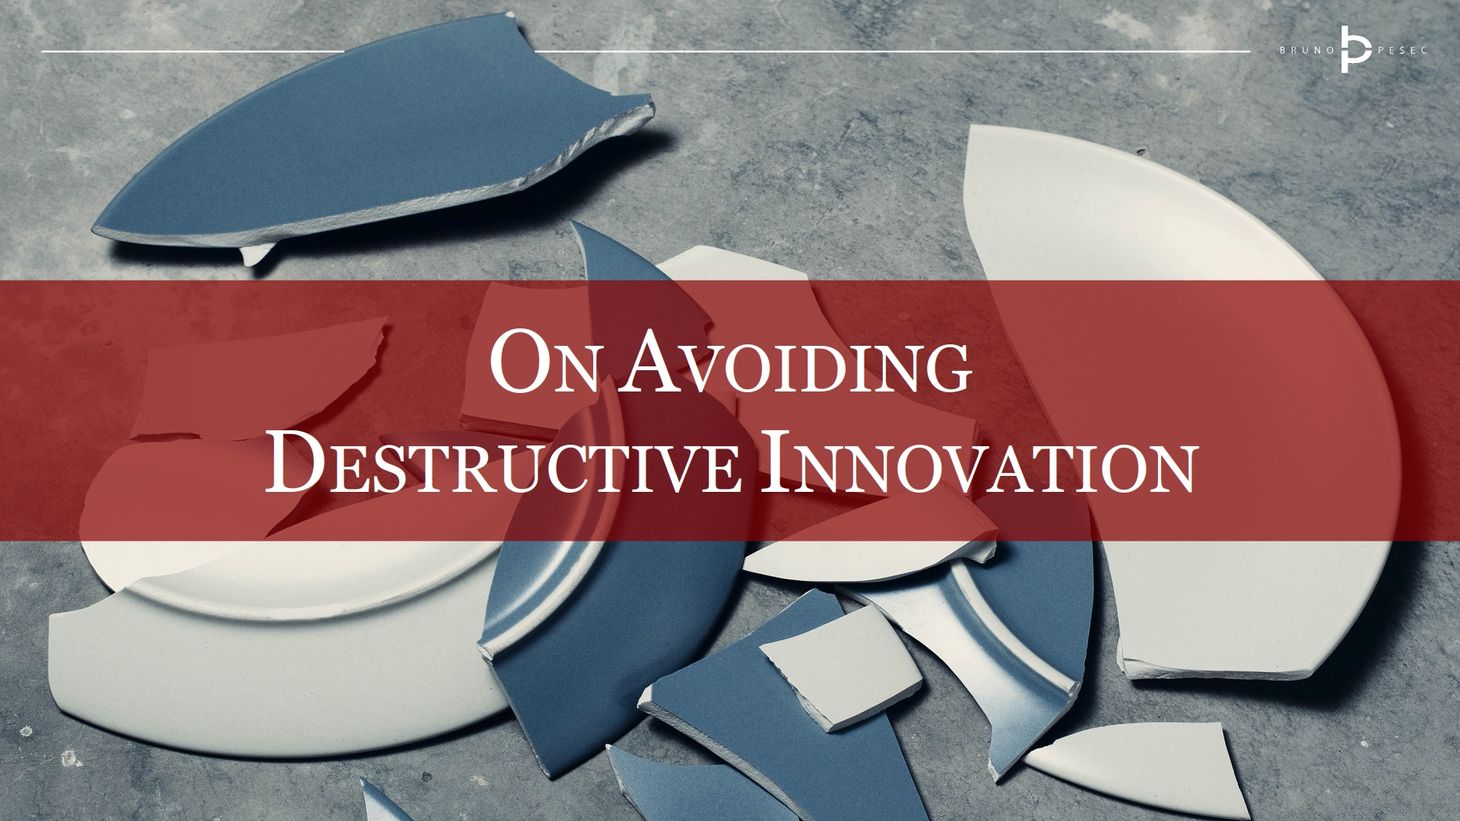 On avoiding destructive innovation